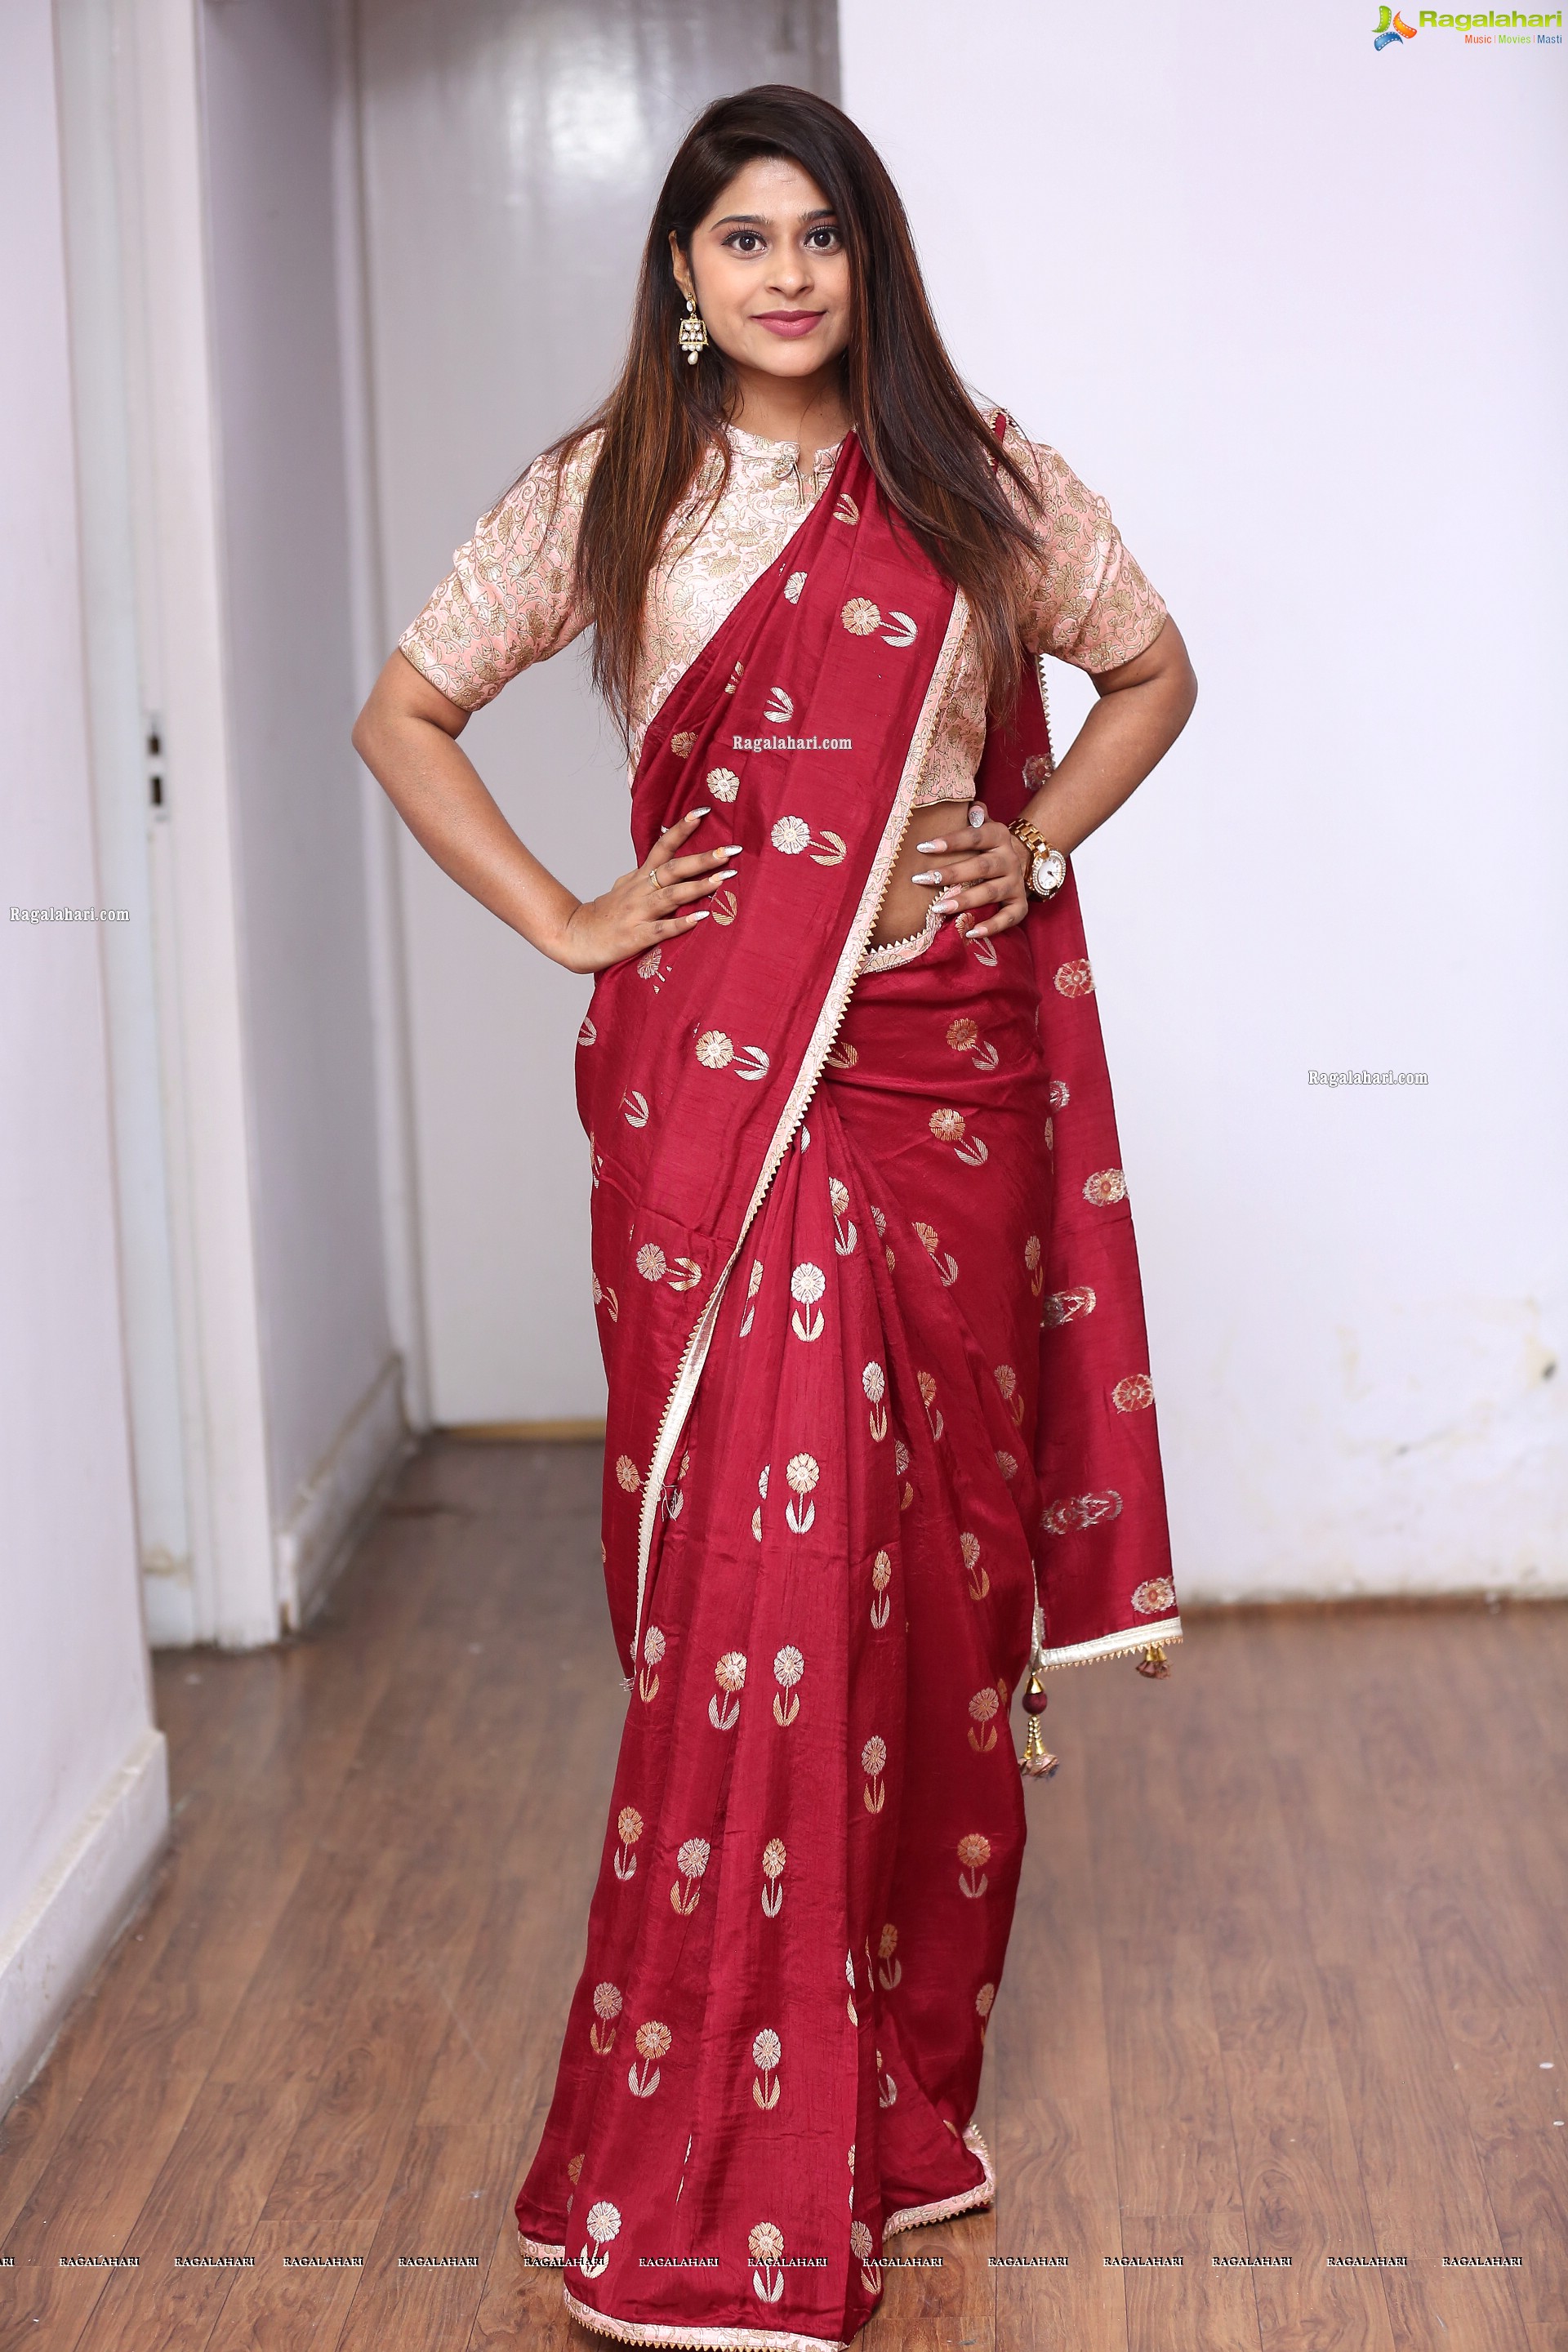 Shravani Varma in Red Saree, HD Photo Gallery